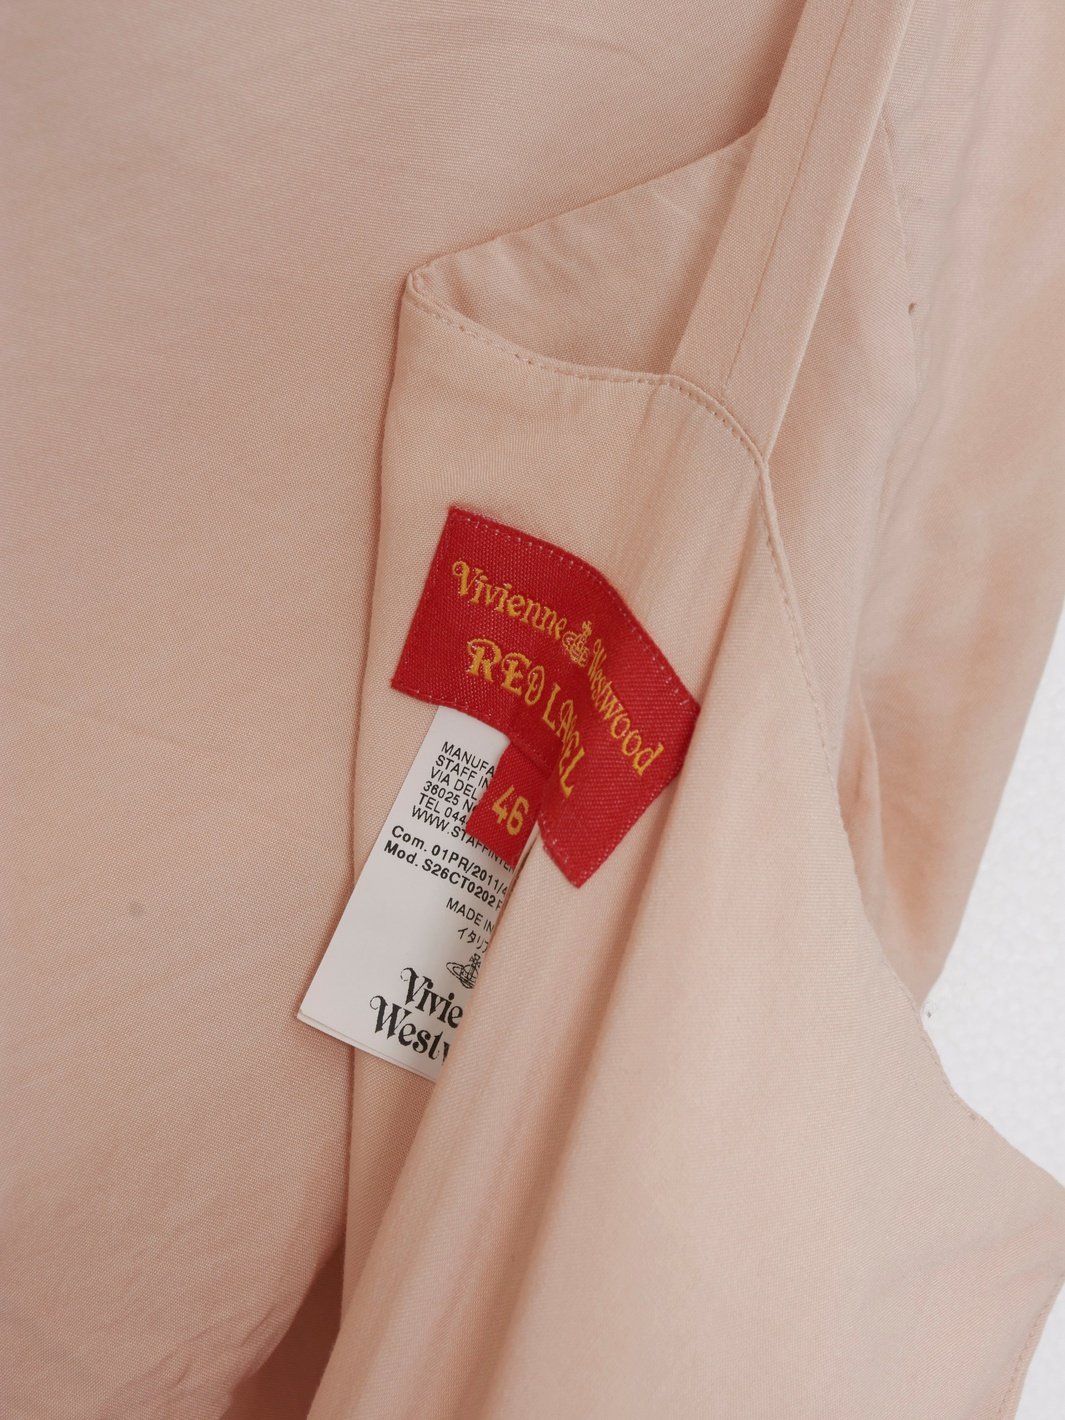 2010 Vivienne Westwood Red Label powder pink long dress